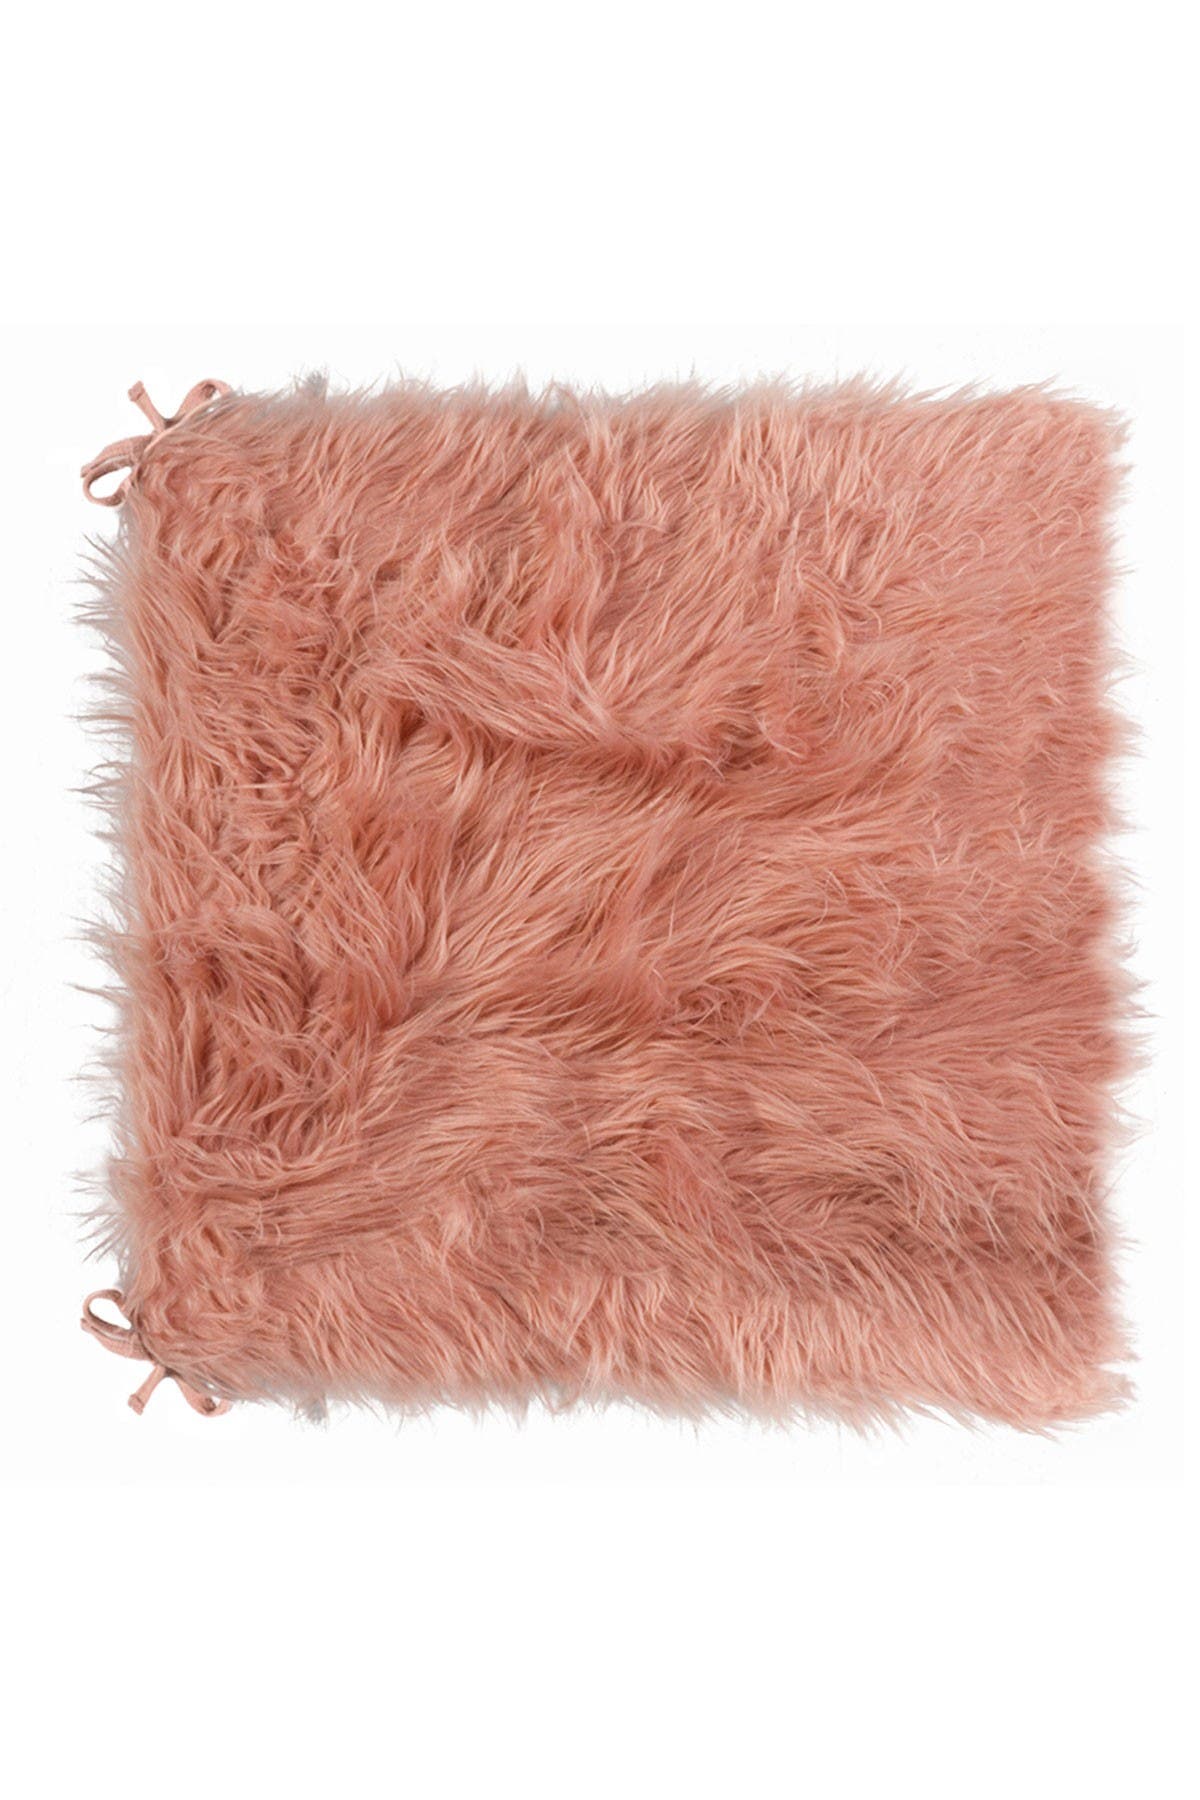 Luxe Laredo Faux Fur Seat Cushion In Light/pastel Pink